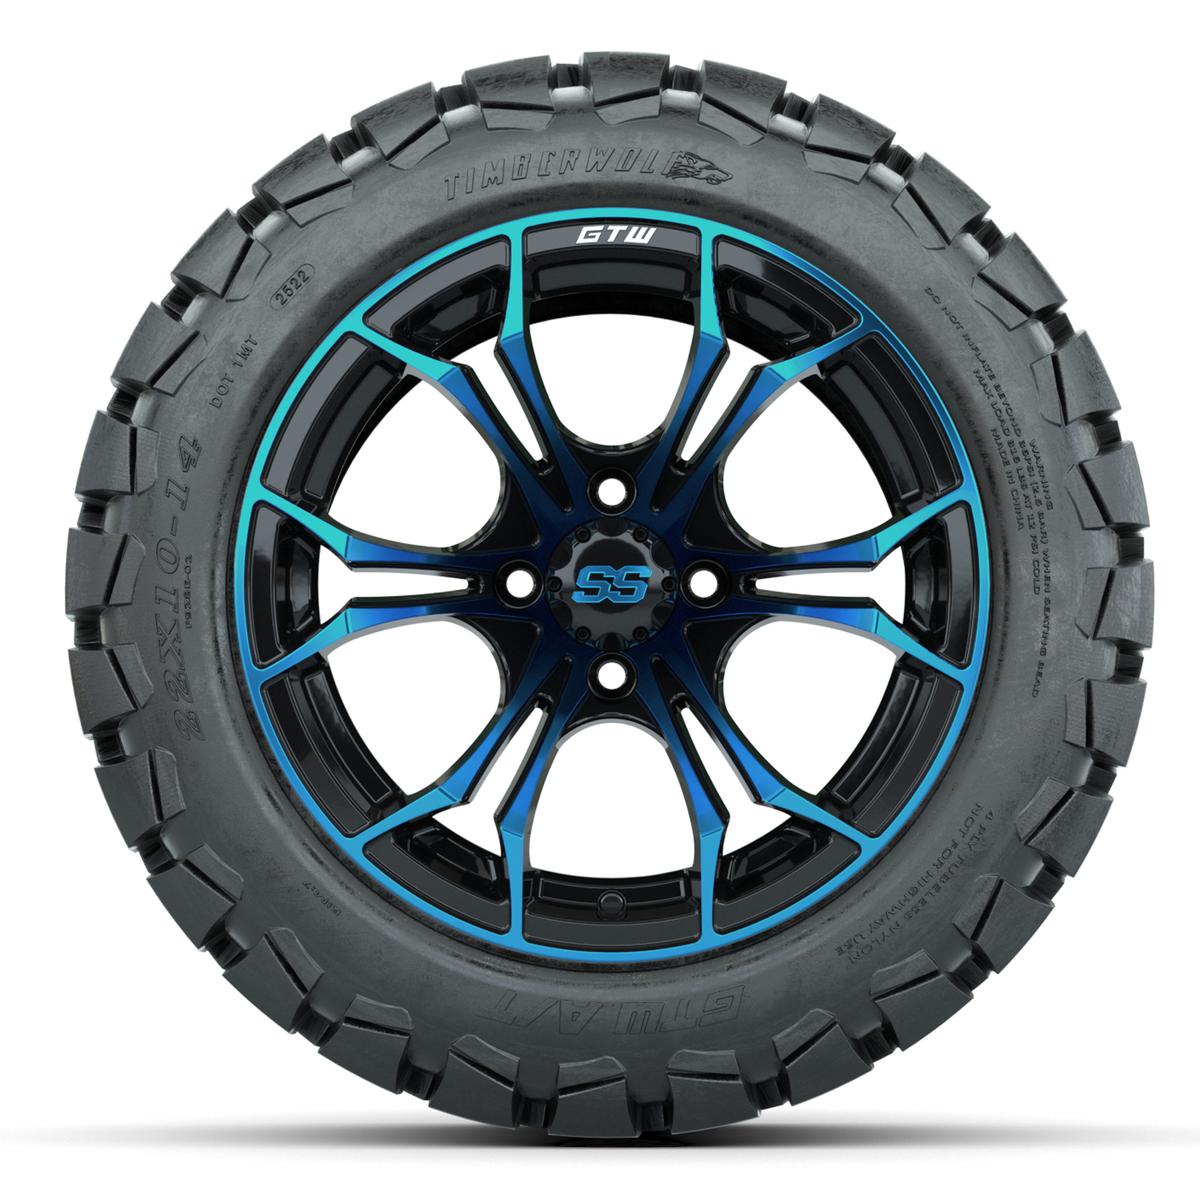 GTW Spyder Blue/Black 14 in Wheels with 22x10-14 GTW Timberwolf All-Terrain Tires – Full Set